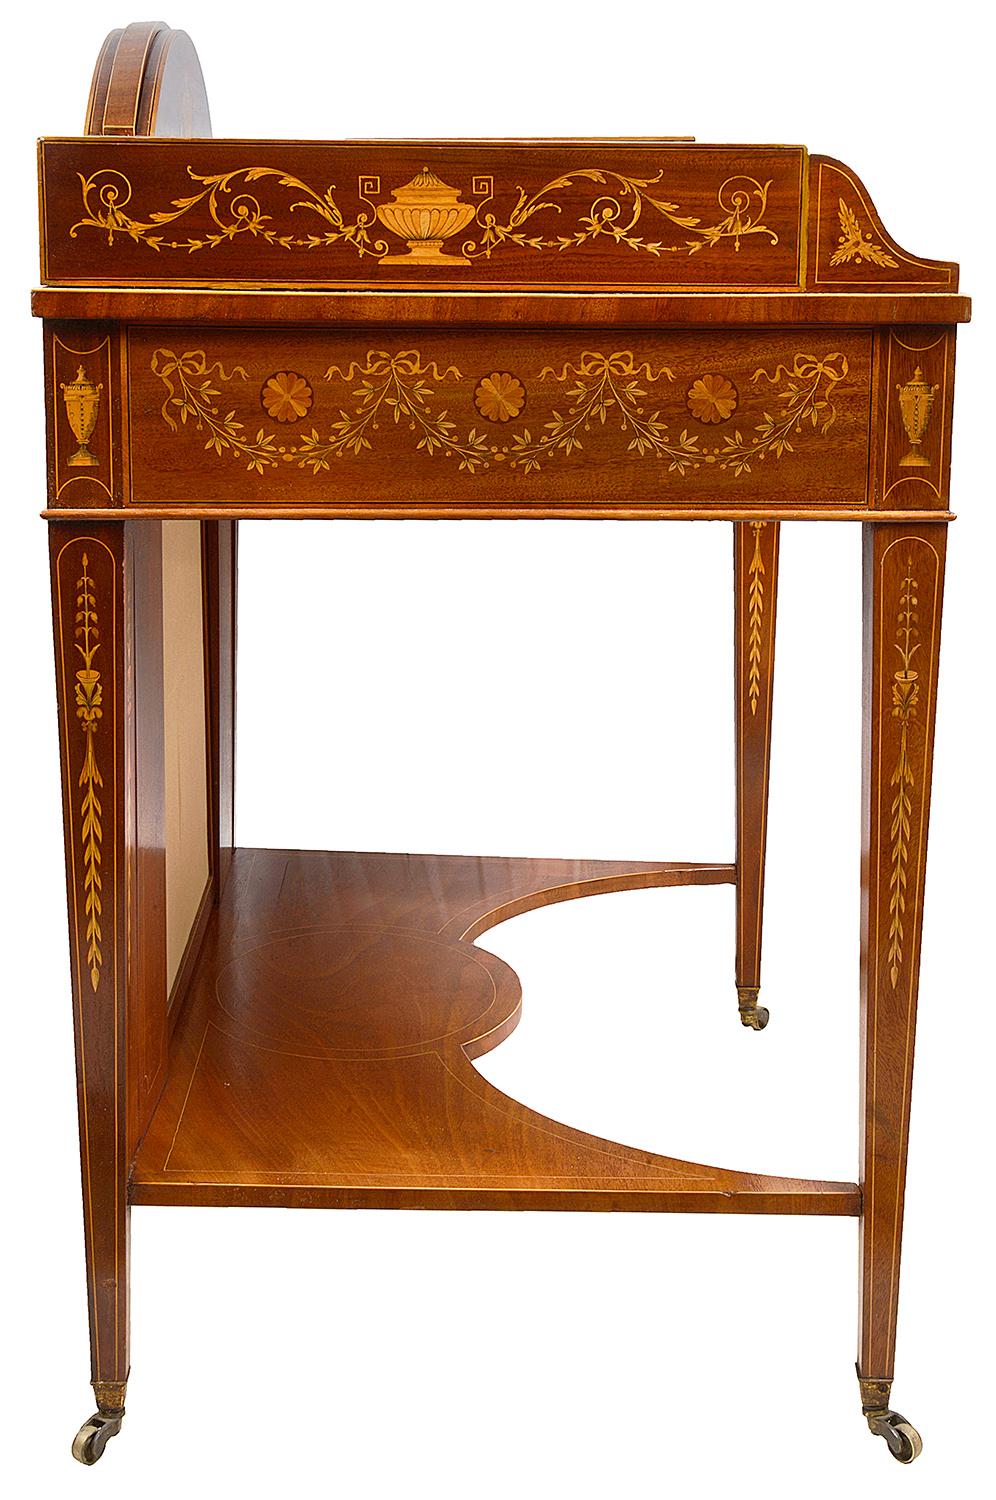 Sheraton Revival Mahogany Inlaid Ladies Desk, 19th Century For Sale 4